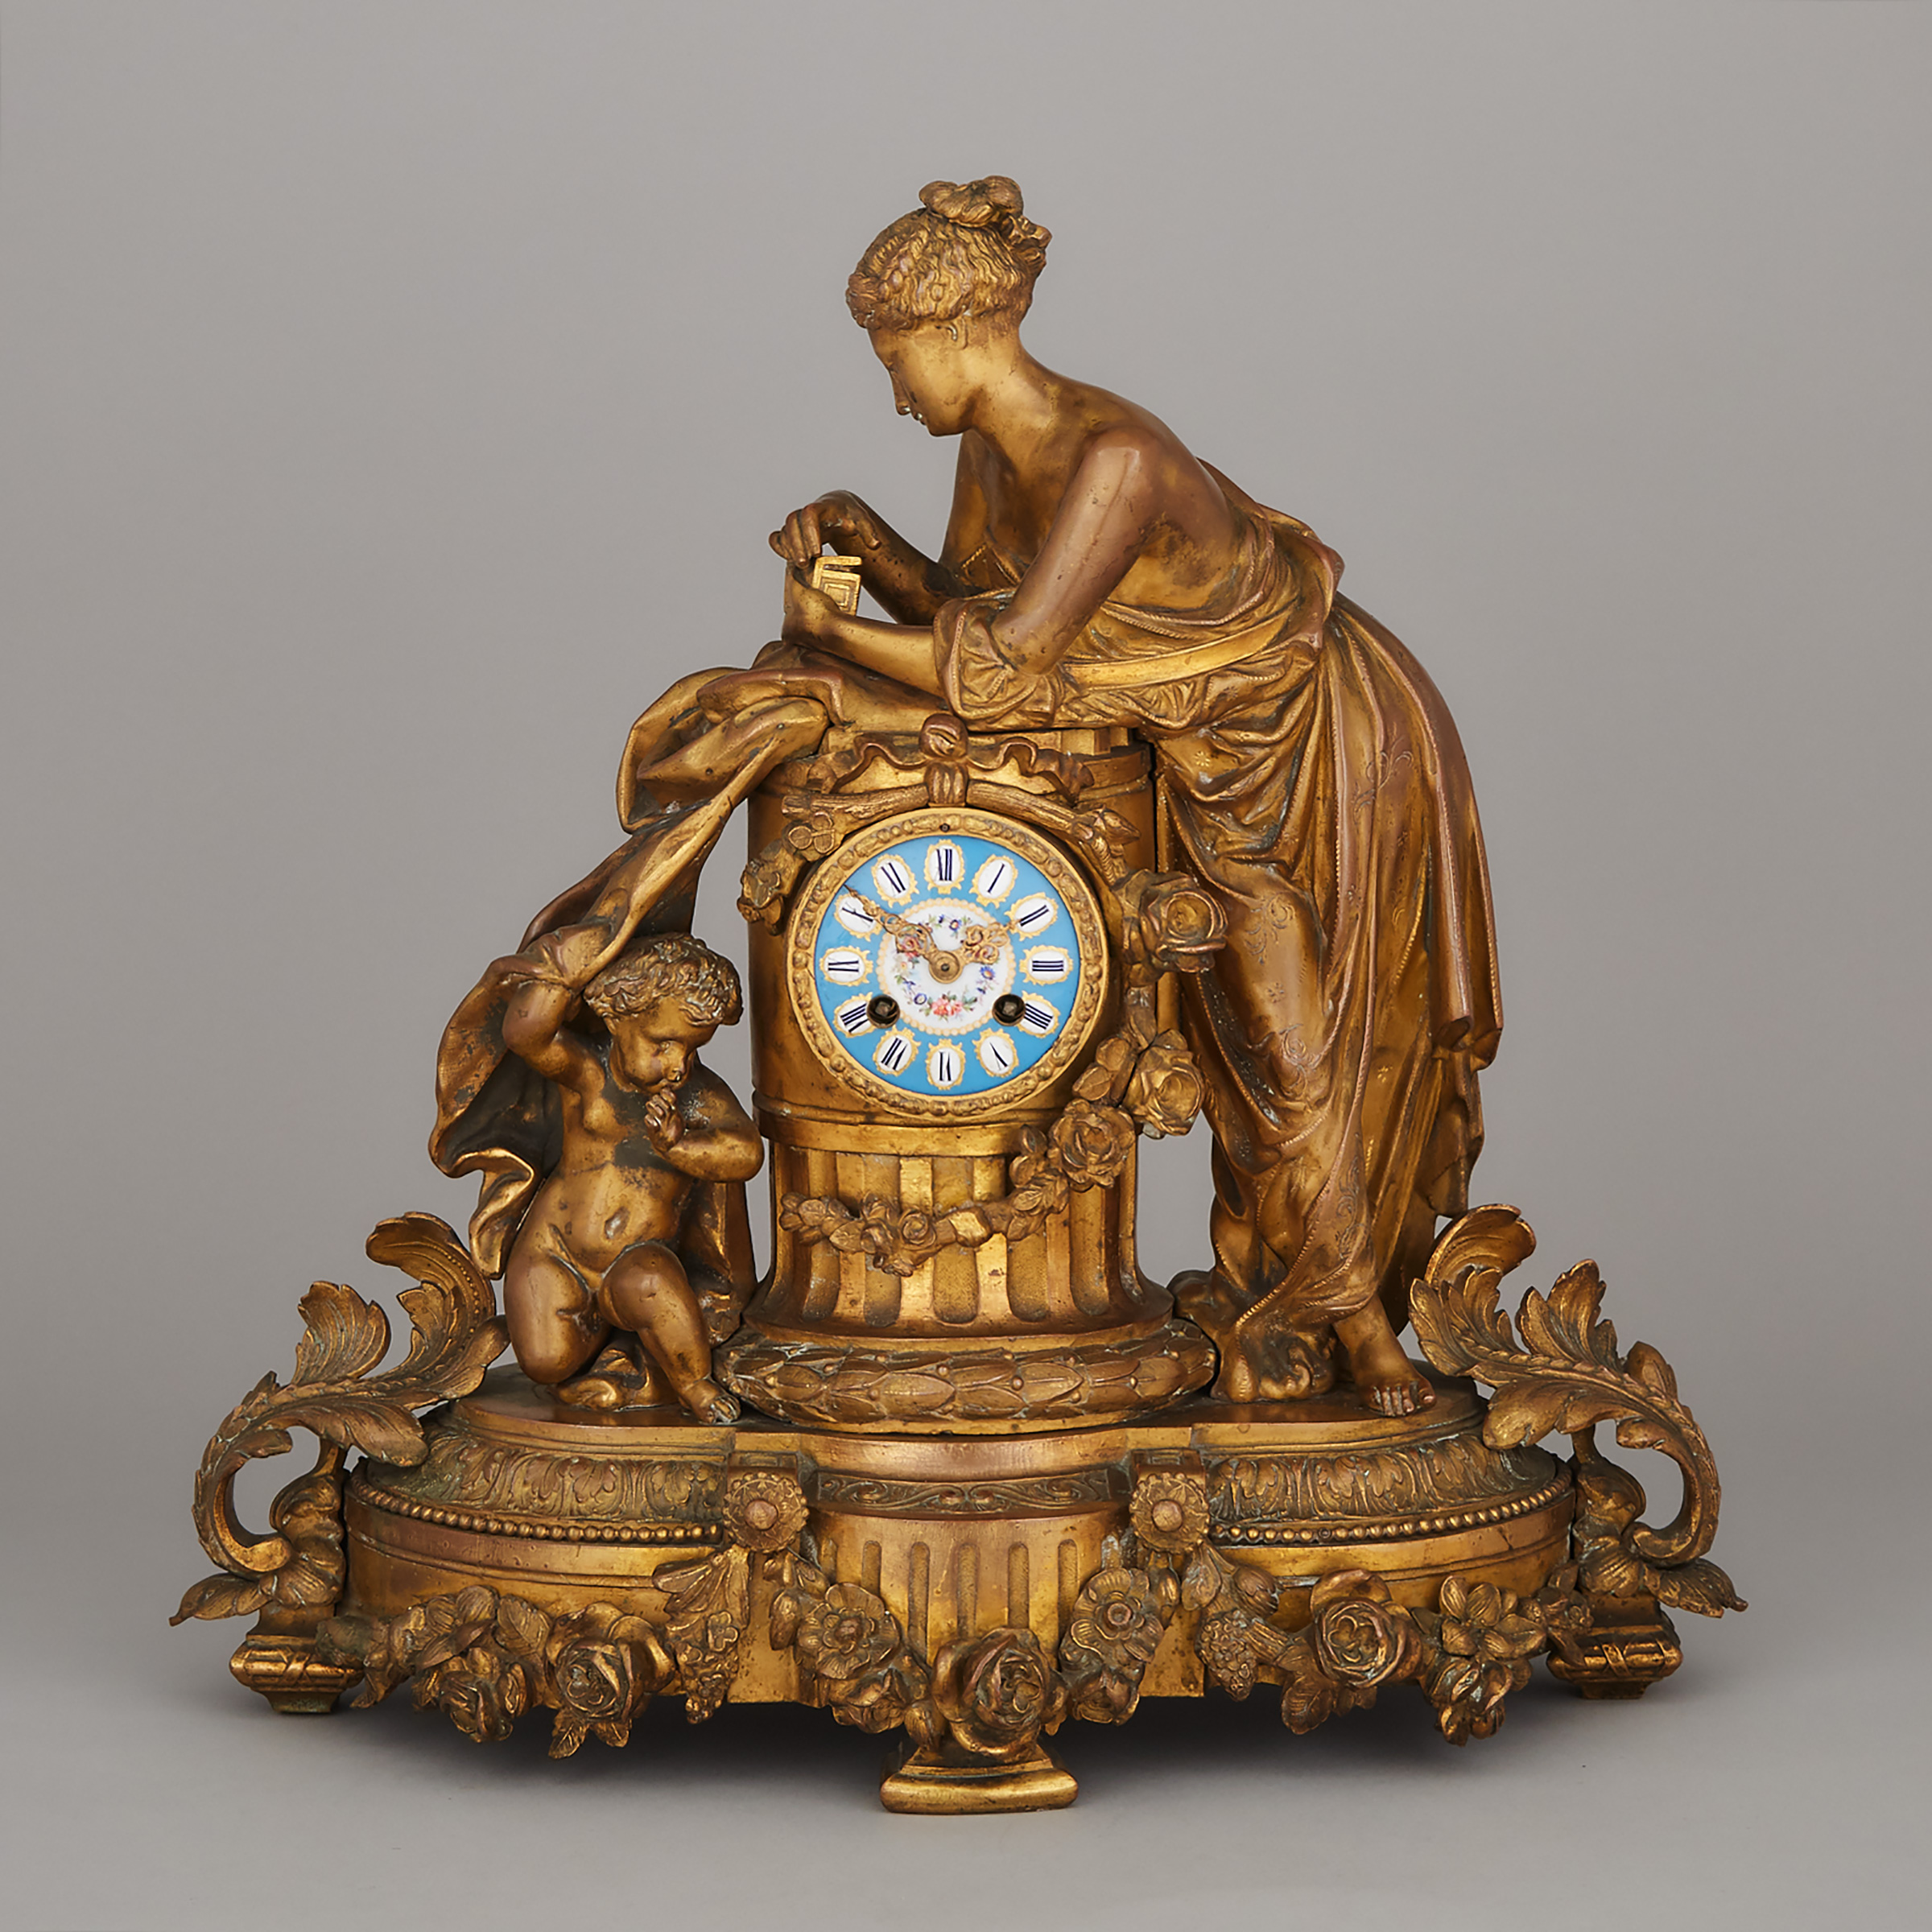 Napoleon III Gilt Metal Figural Mantel Clock, mid 19th century